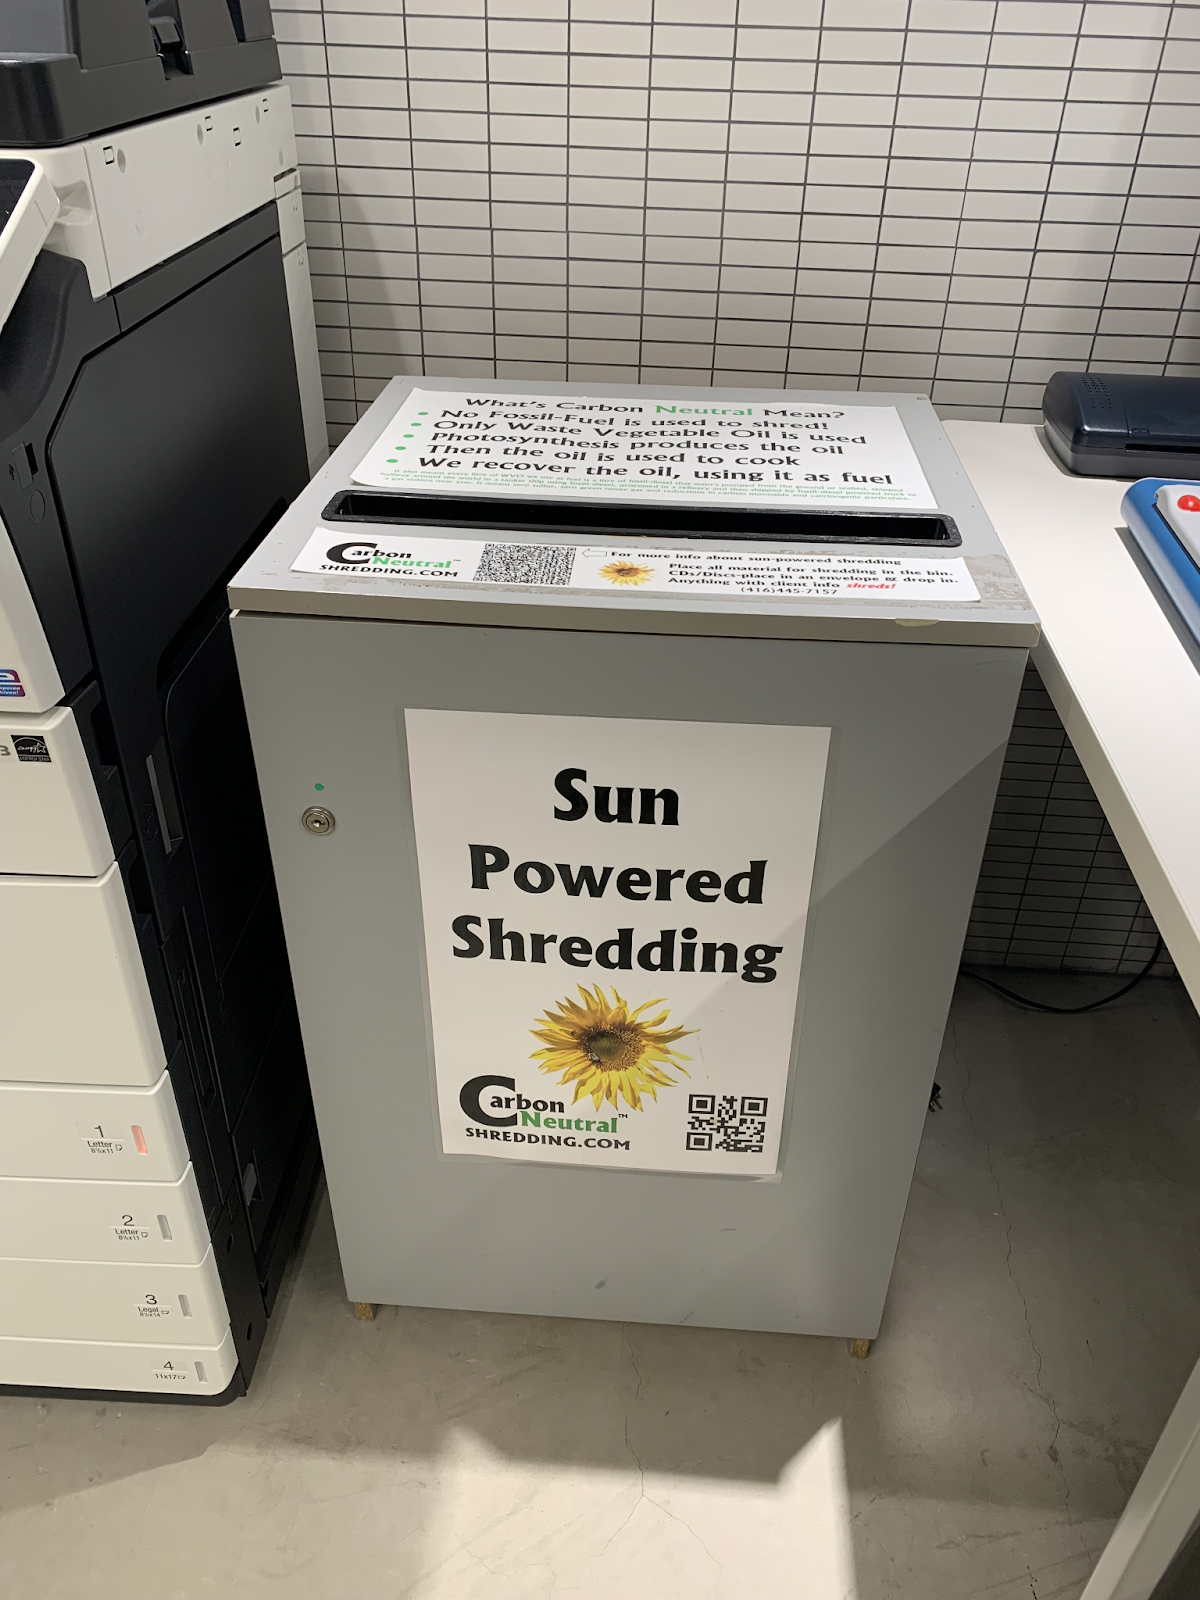 Sun-Powered Shredding bins at Vena